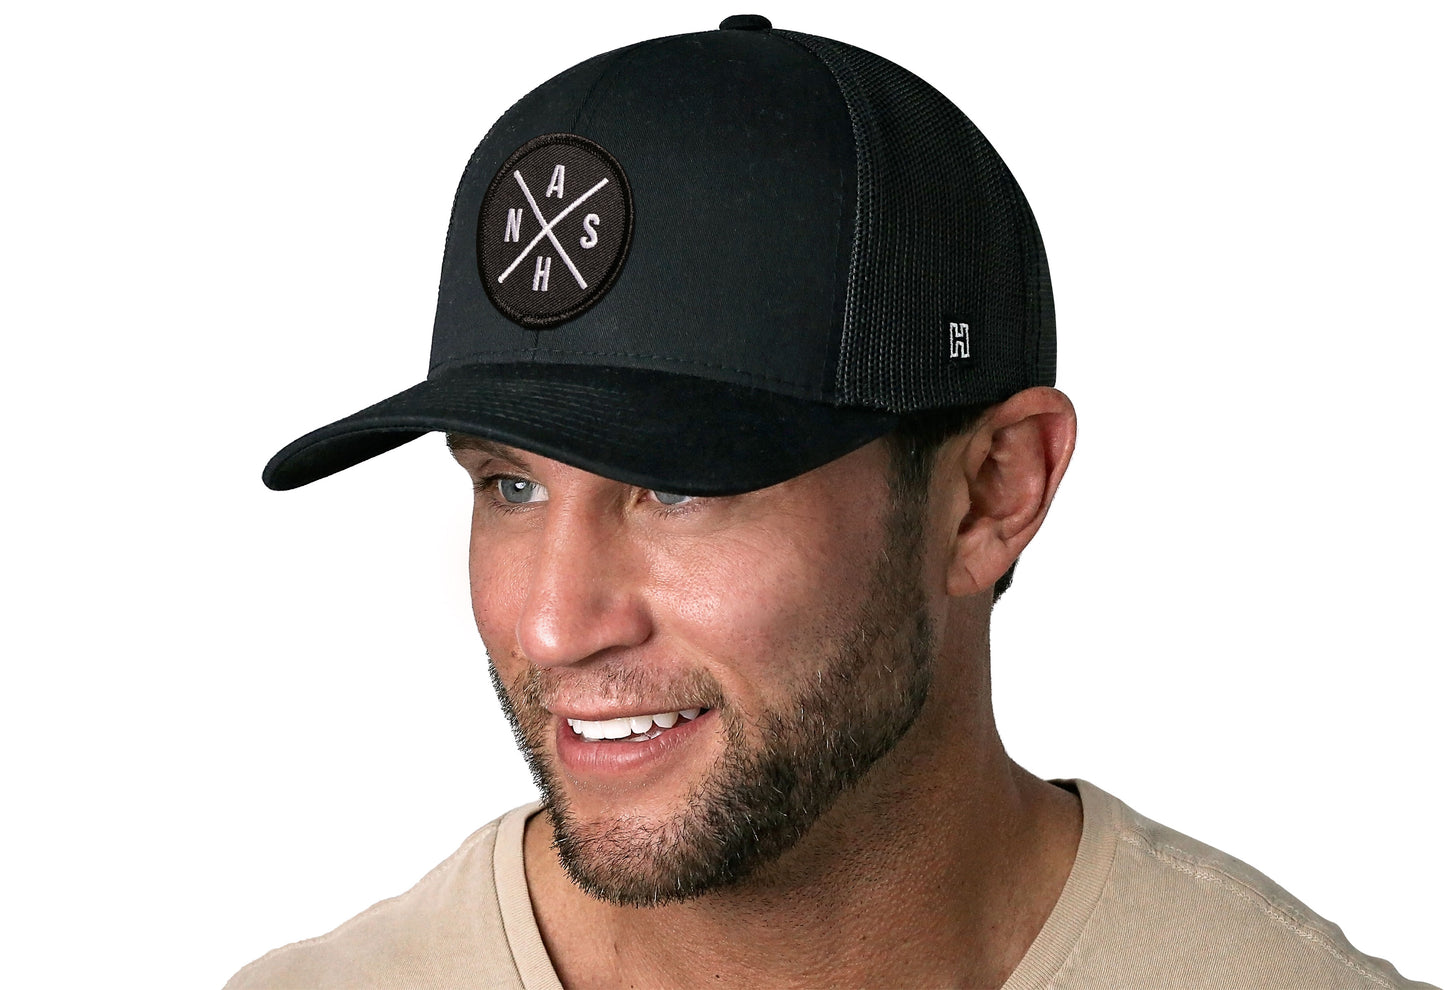 Nashville Trucker Hat  |  Black NASH Snapback